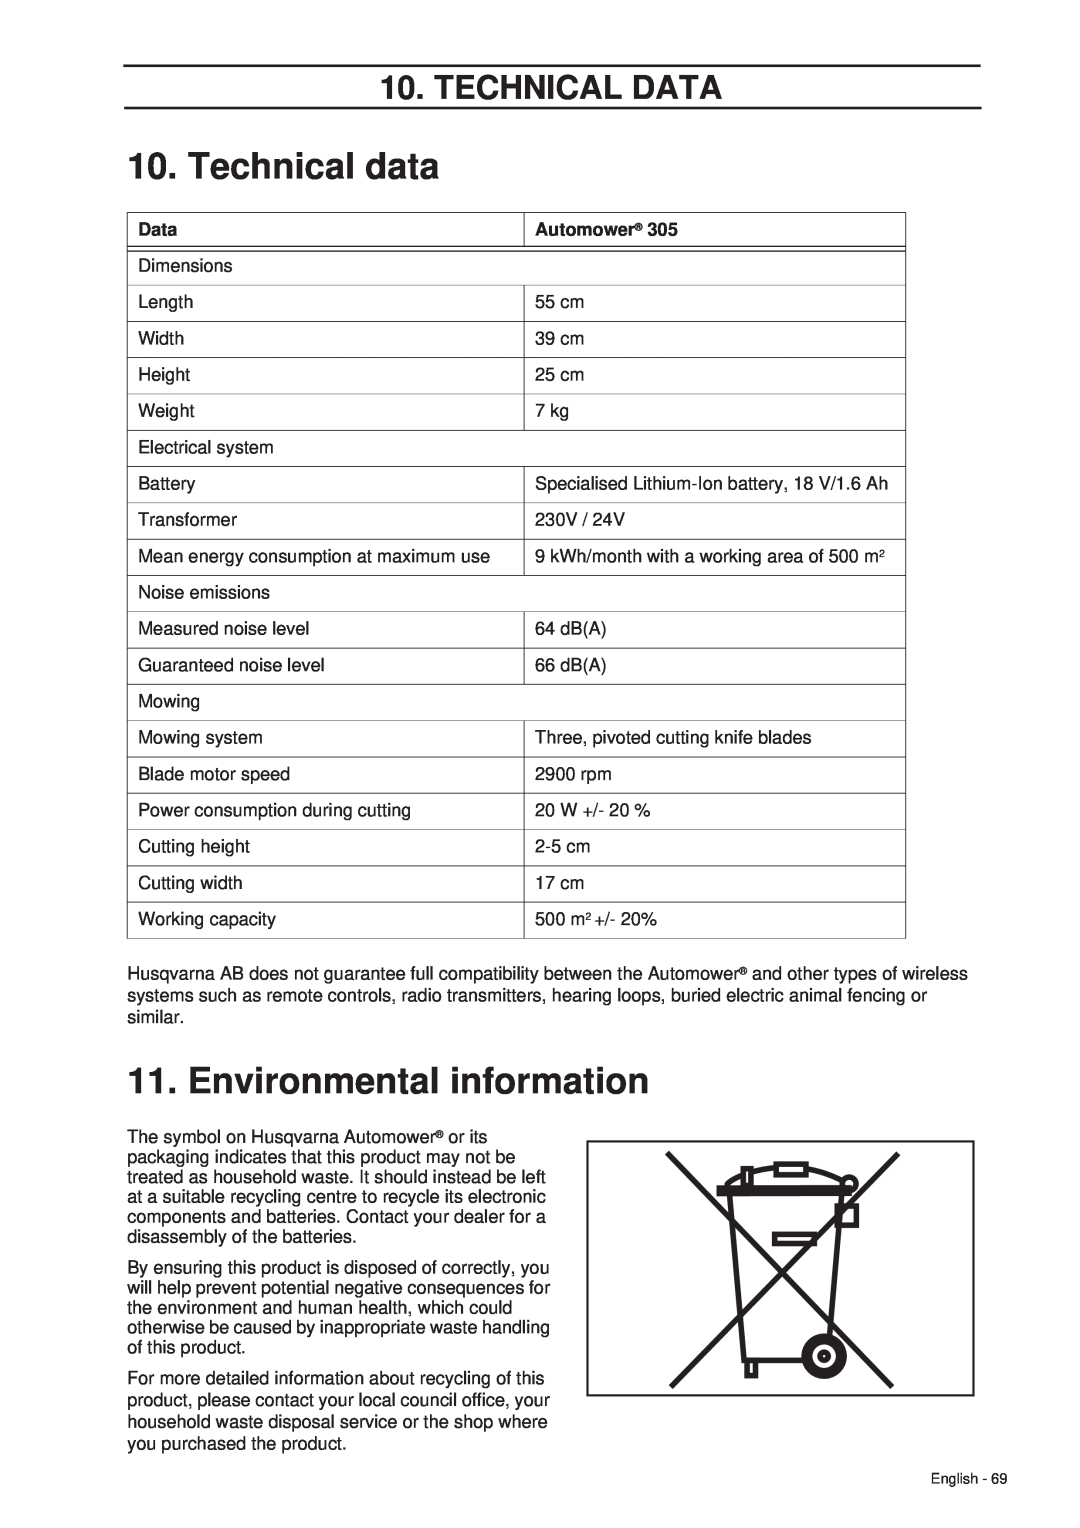 Husqvarna 305 manual Technical data, Environmental information, Technical Data, Automower 